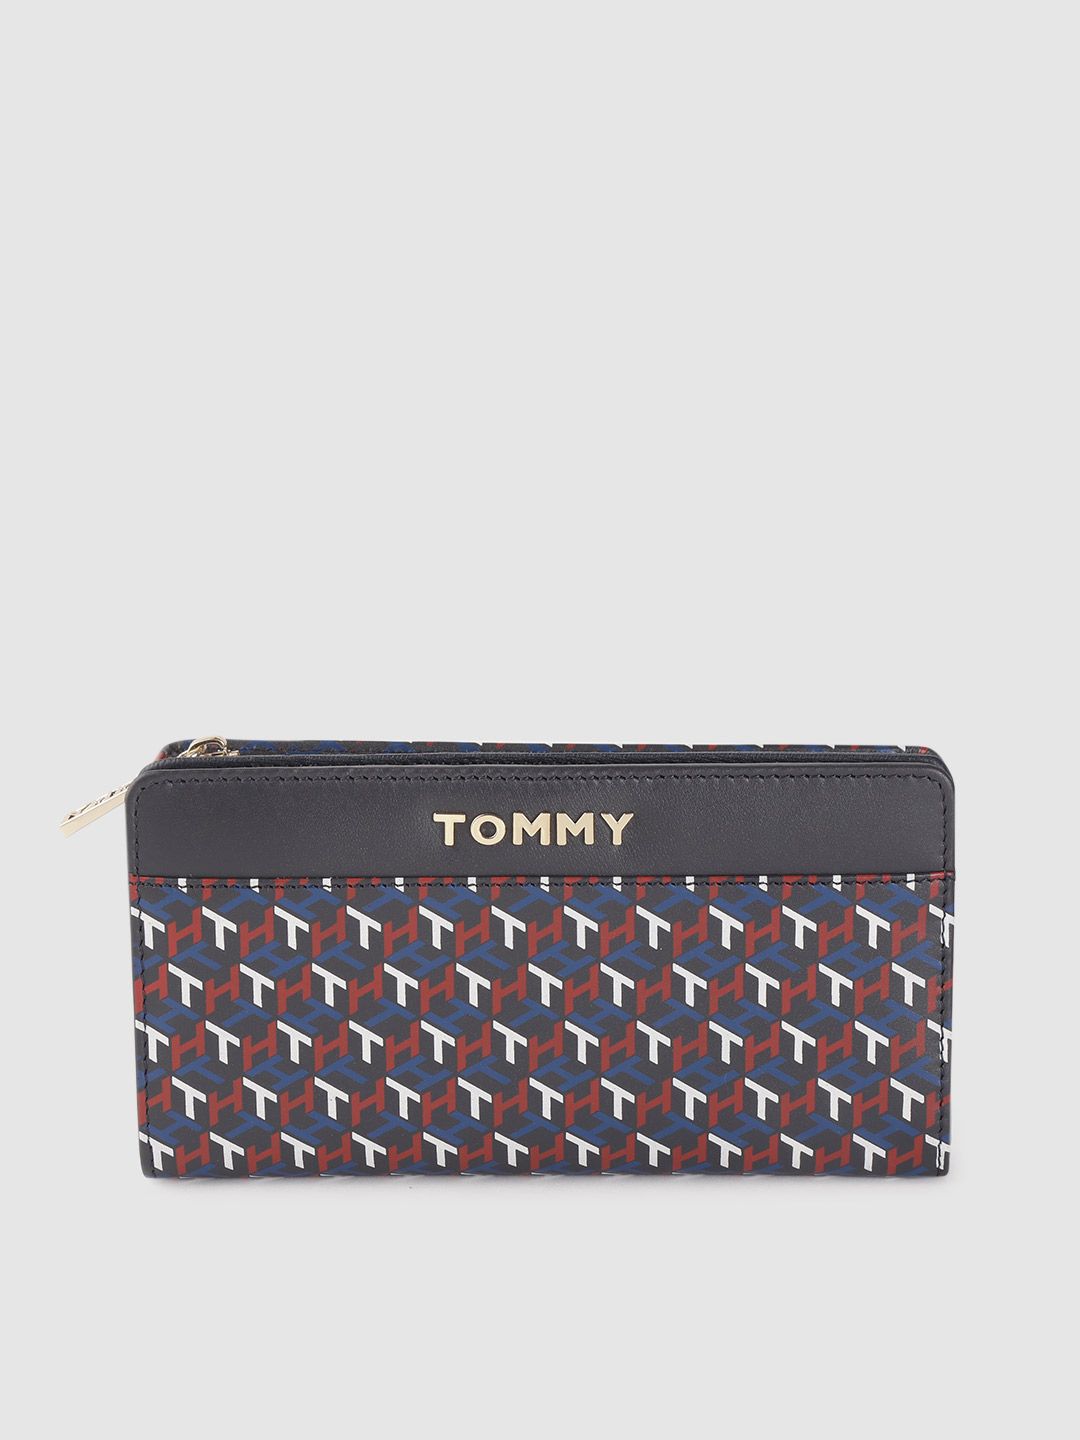 Tommy Hilfiger Women Navy Blue & Red Brand Logo Print Leather Zip Around Wallet Price in India